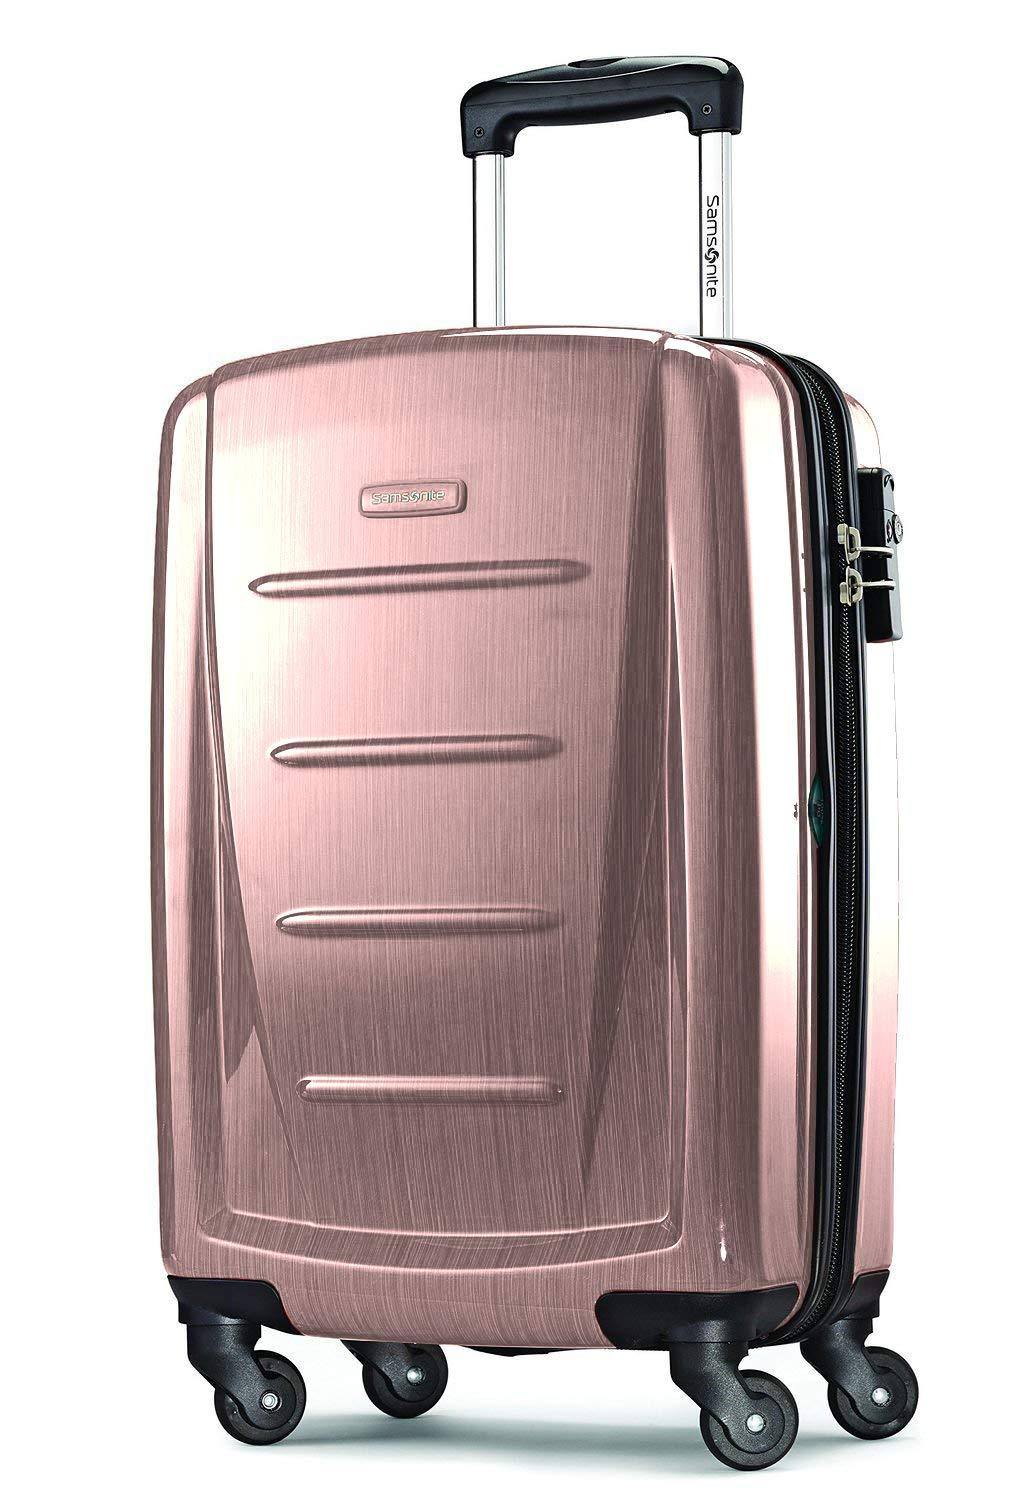 Samsonite Winfield 2 20 4-Wheel Carry-On Luggage – Luggage Online